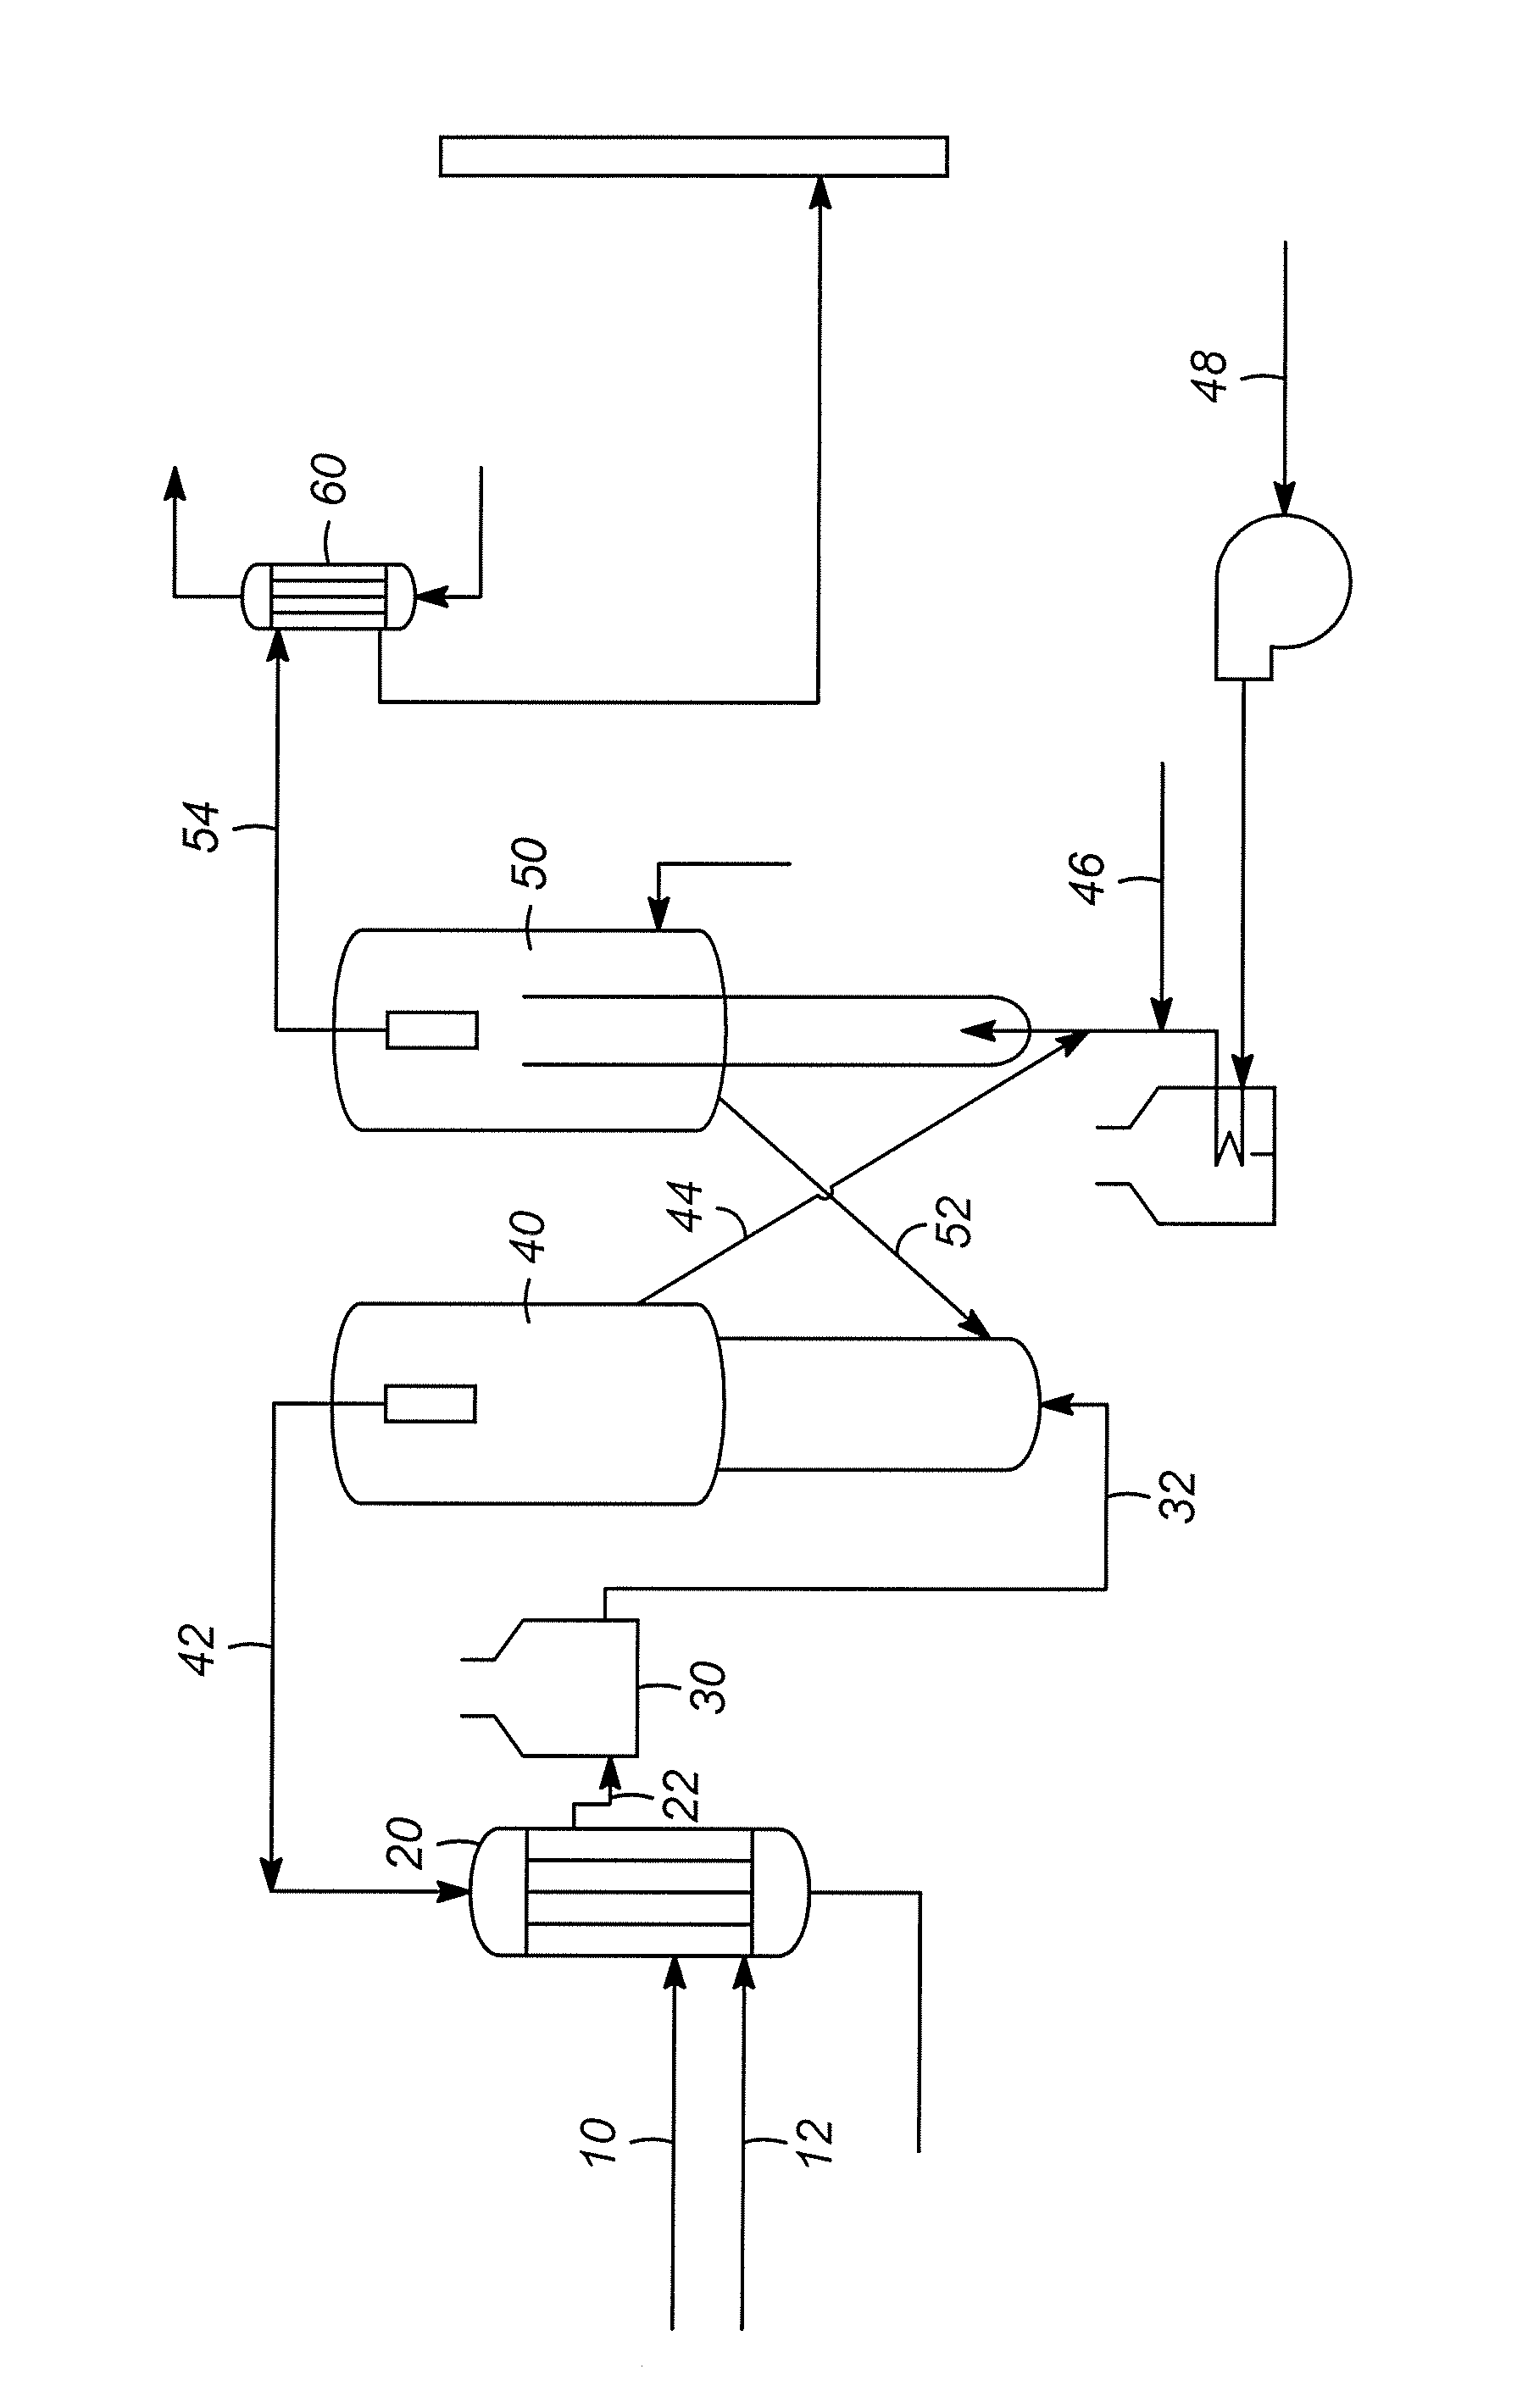 Reactor Flowscheme for Dehydrogenation of Propane to Propylene